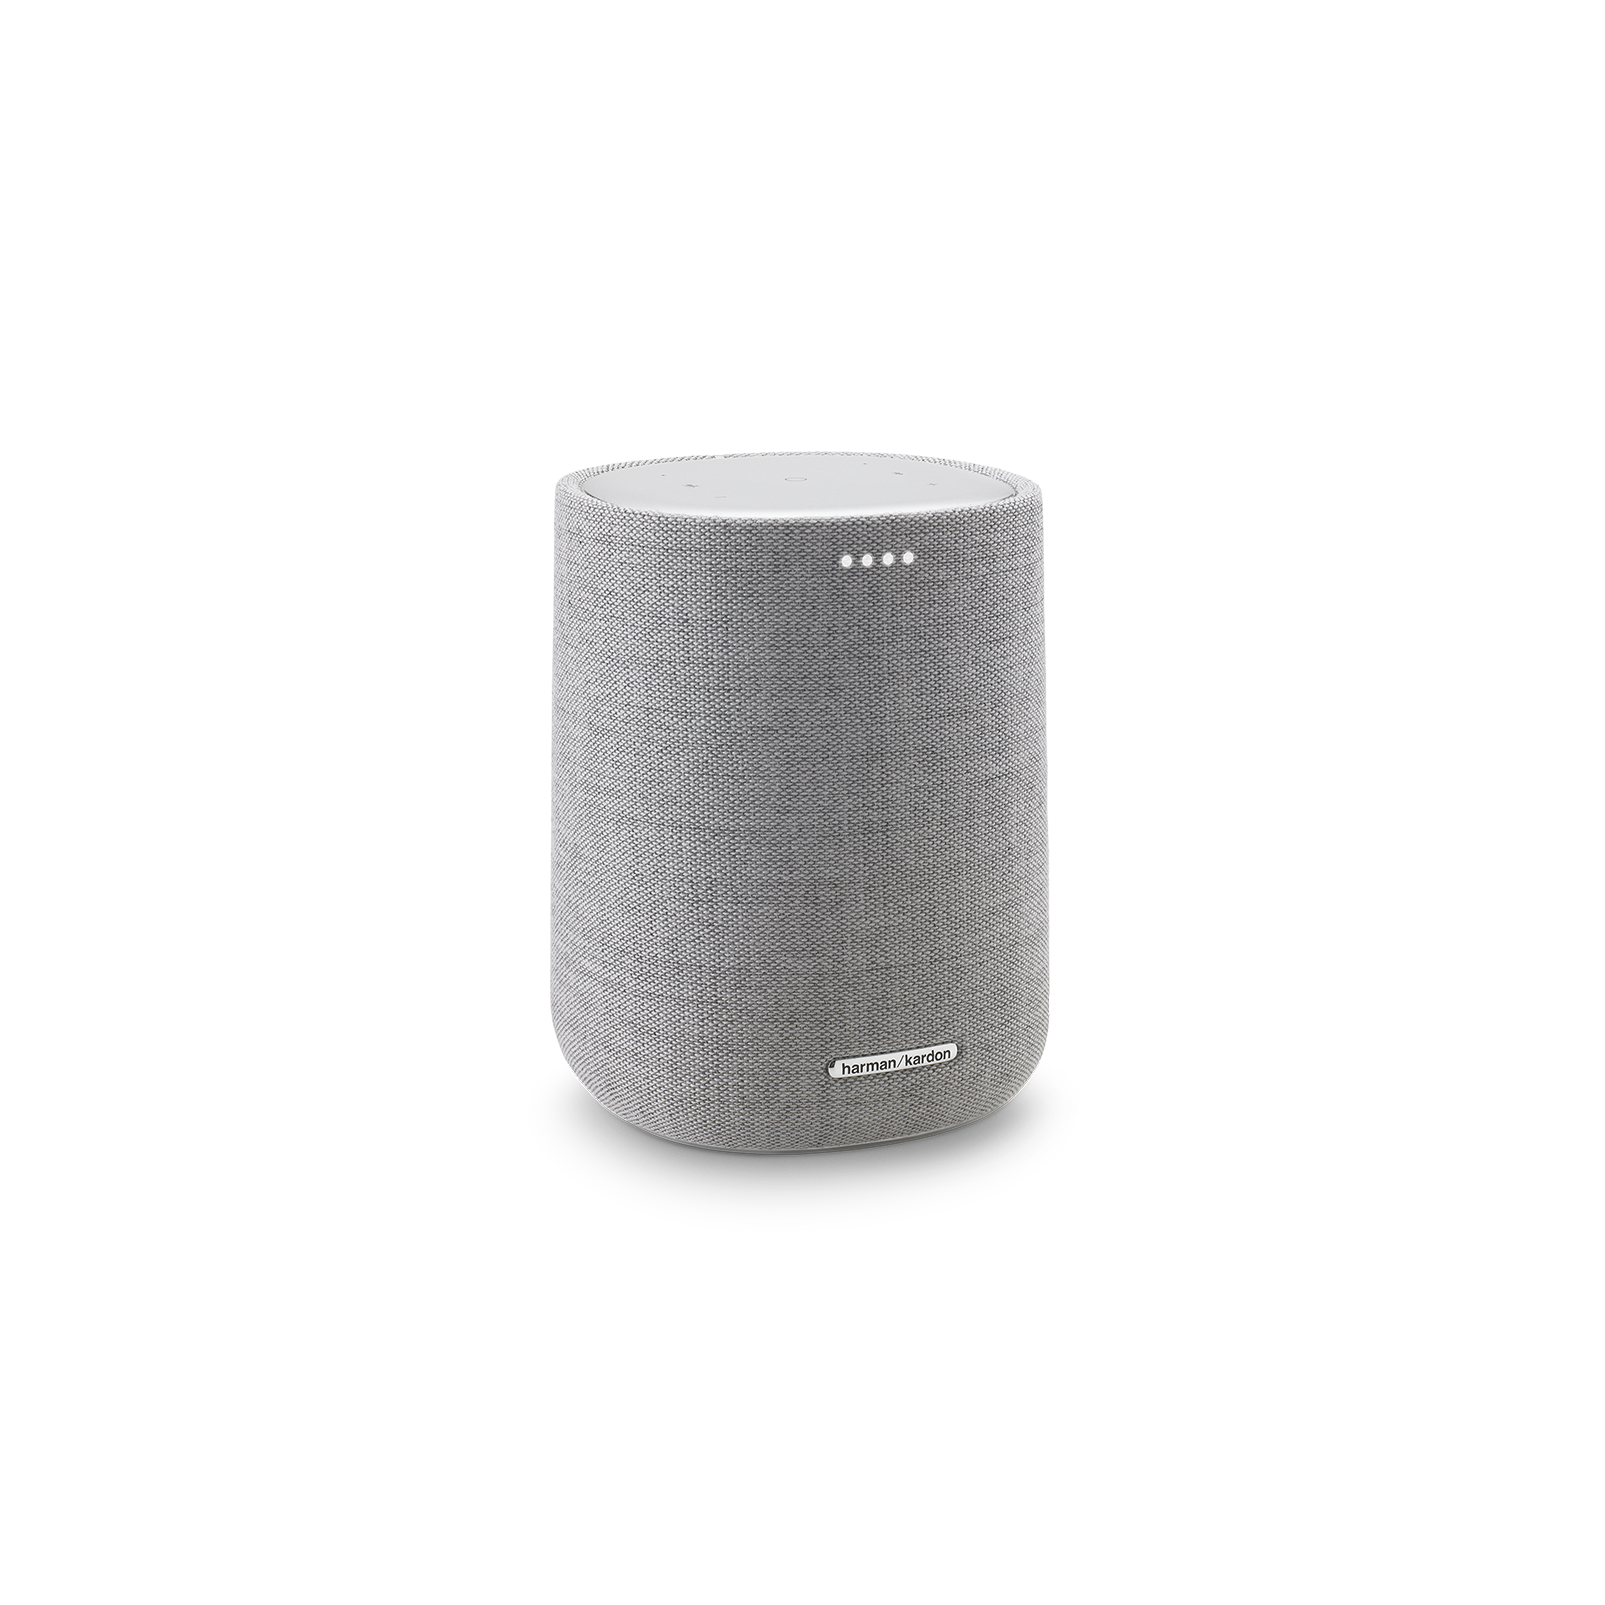 Harman Kardon Citation One MKIII - Grey - All-in-one smart speaker with room-filling sound - Hero